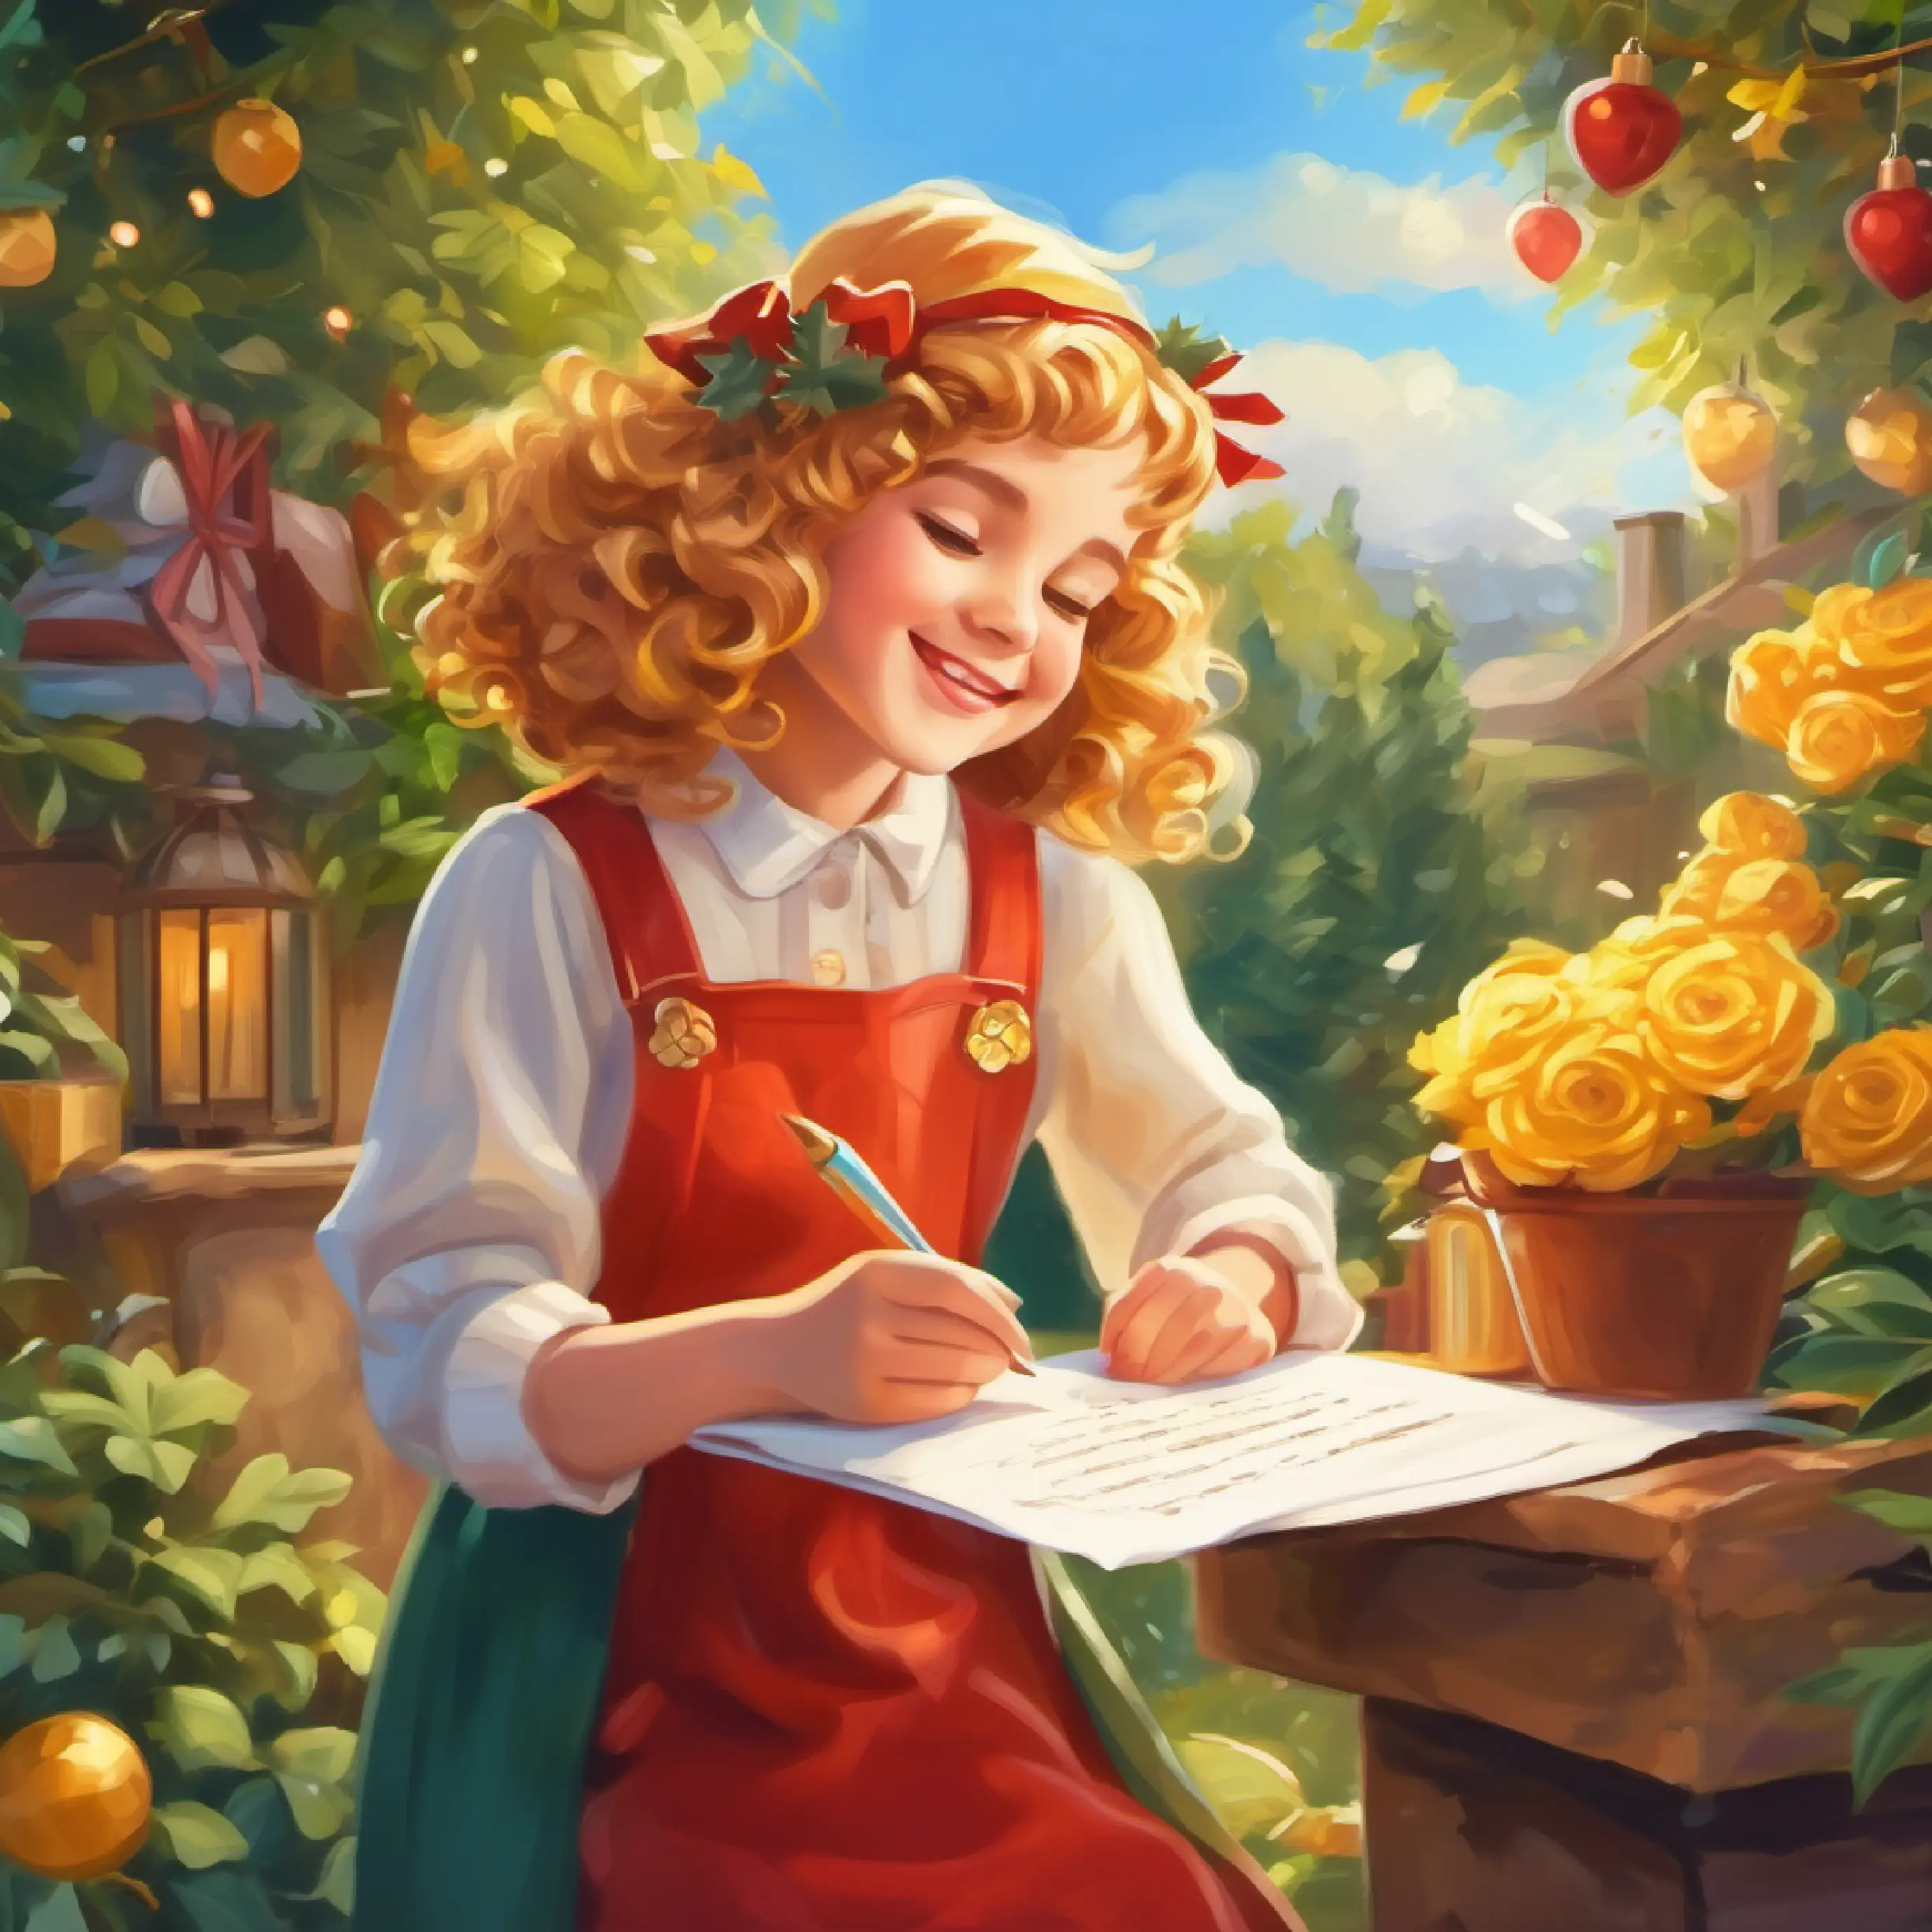 Golden curls, joyful, loves outdoors, kind heart writing a letter to her cousin about garden adventures.